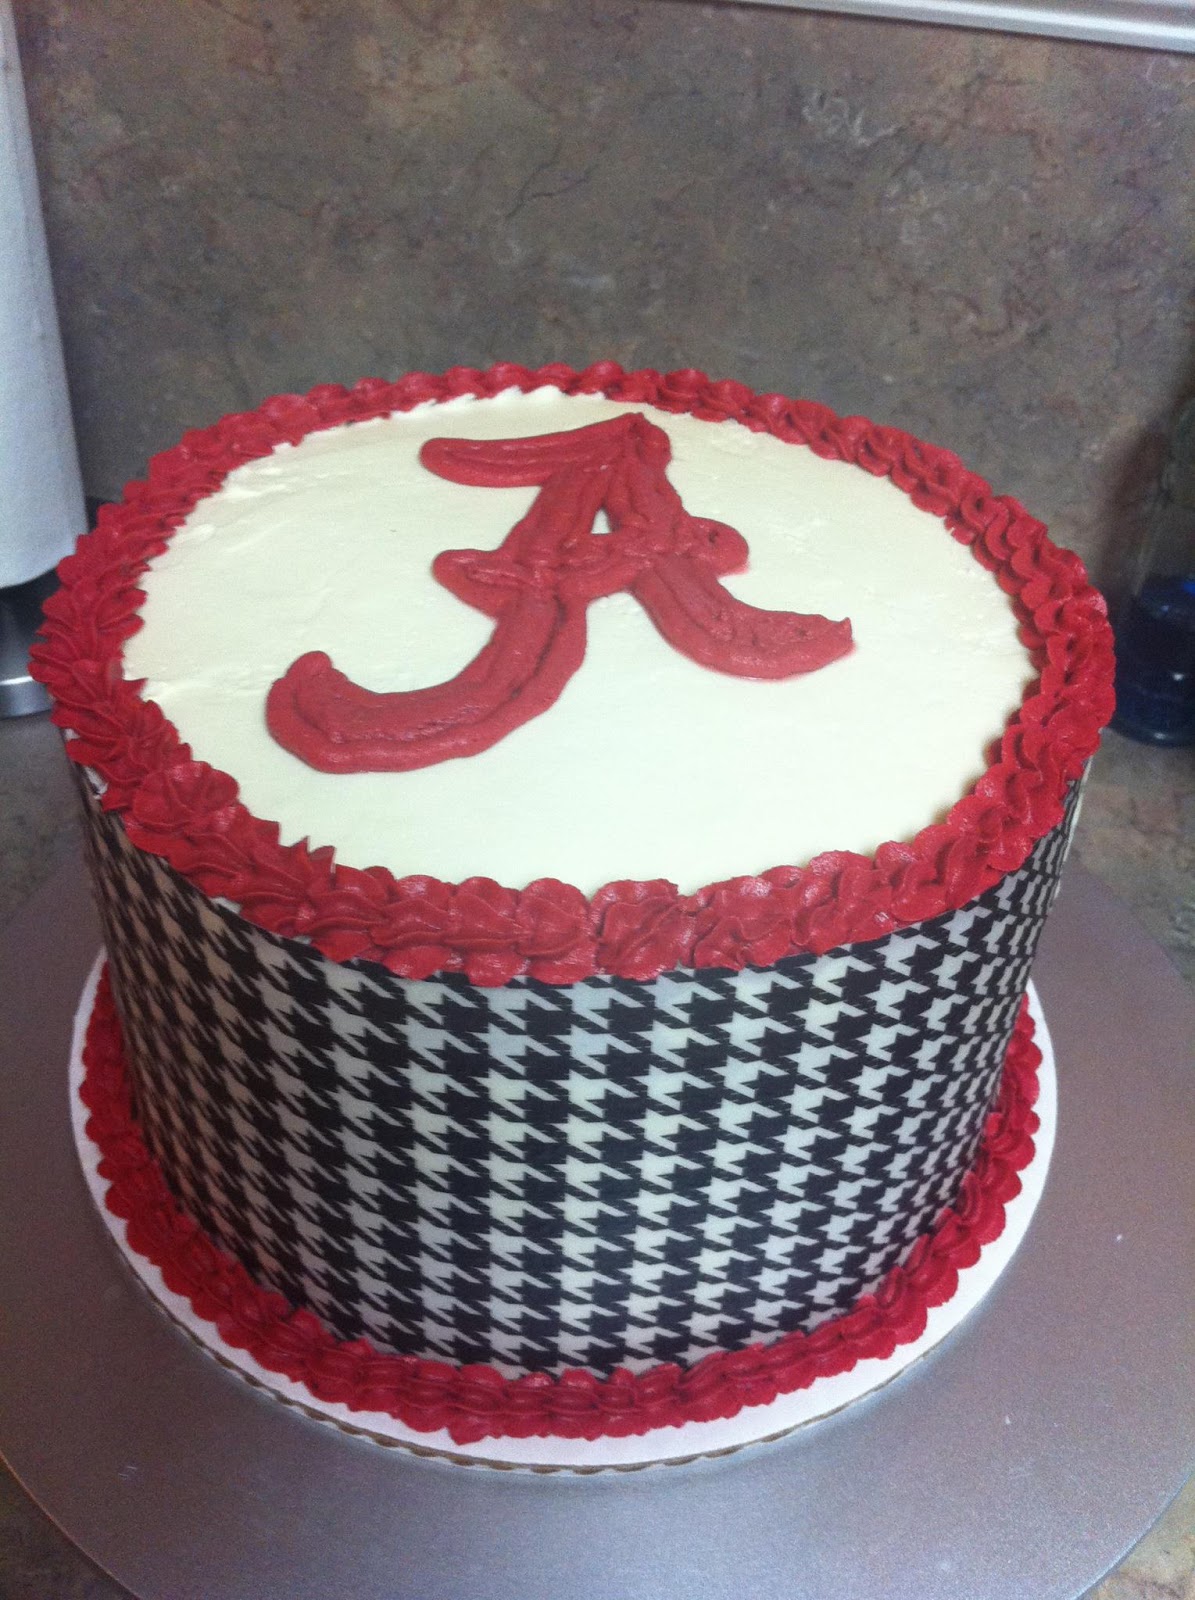 Alabama Football Birthday Cake